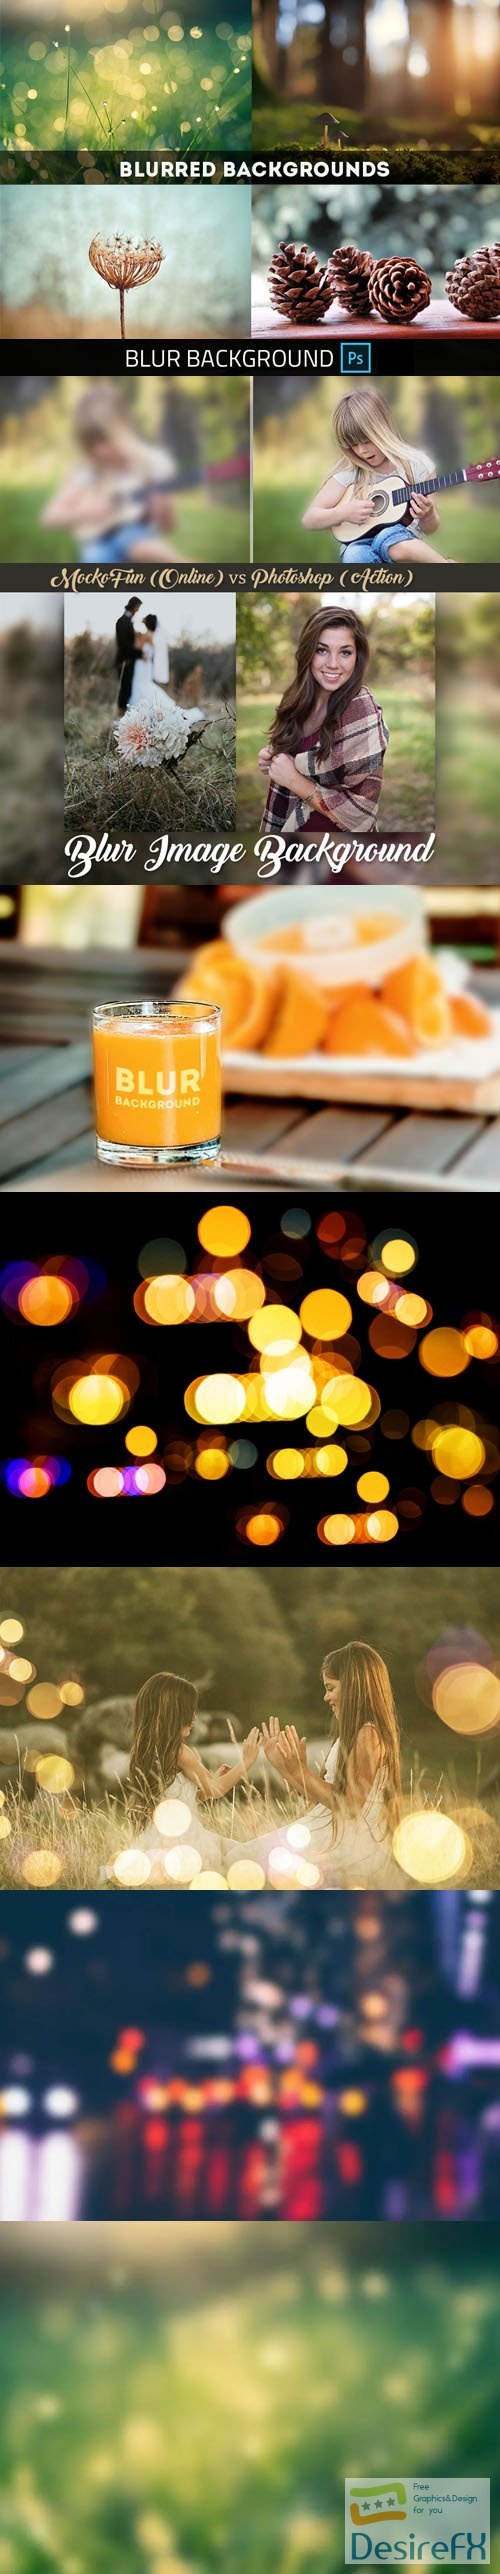 Blur Background - Photoshop Action